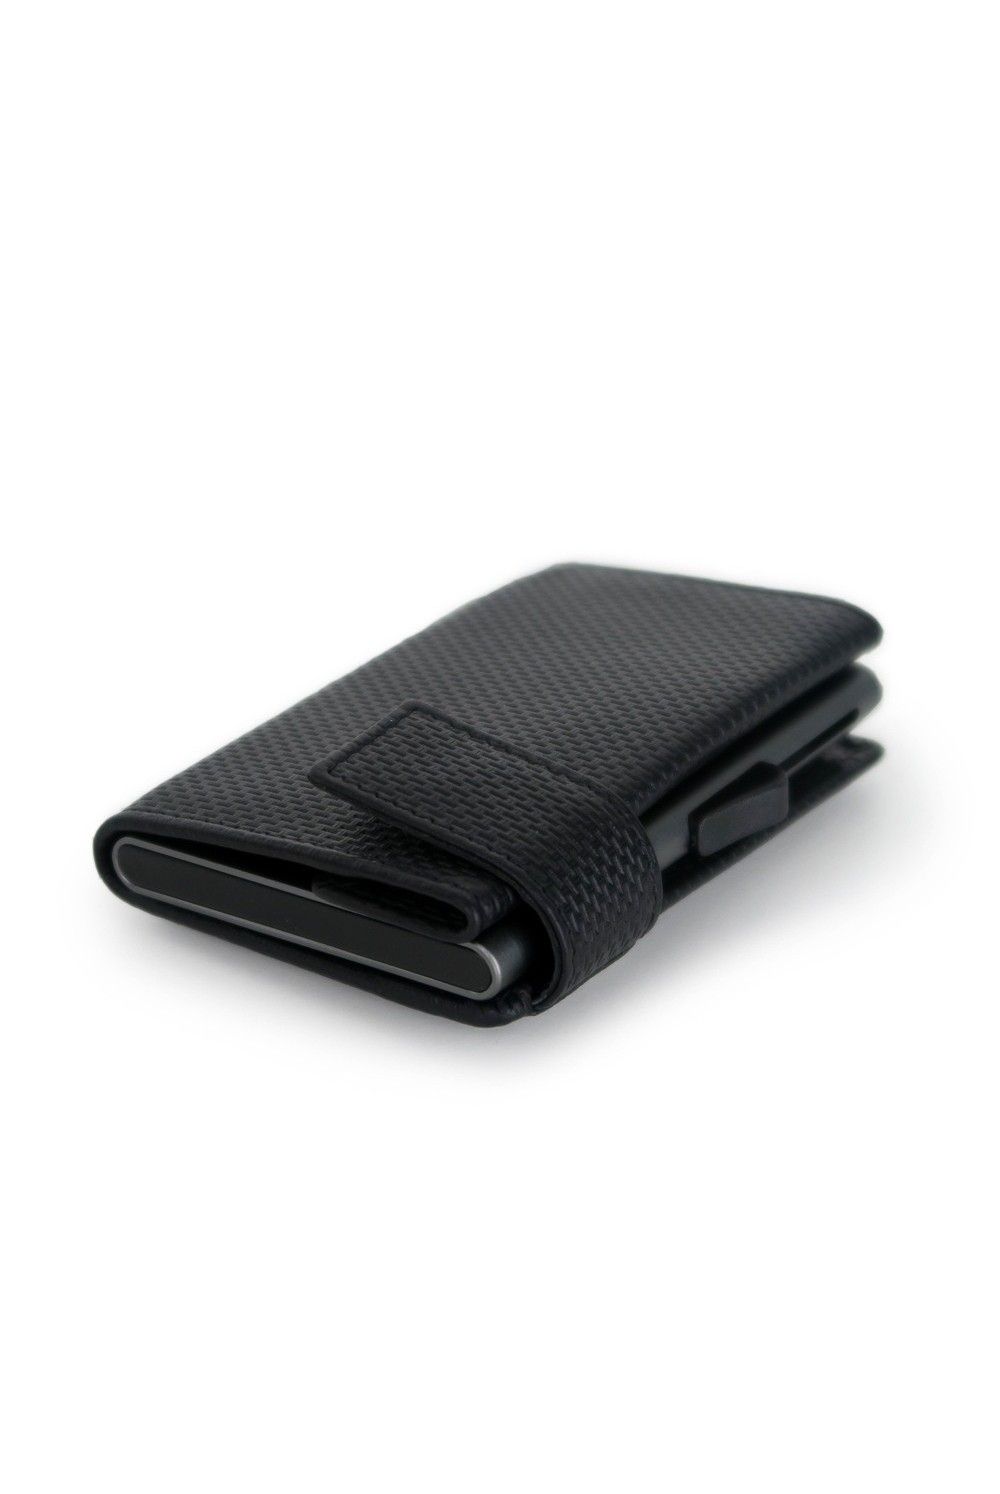 SecWal Card Case RV Leather Osaka Black